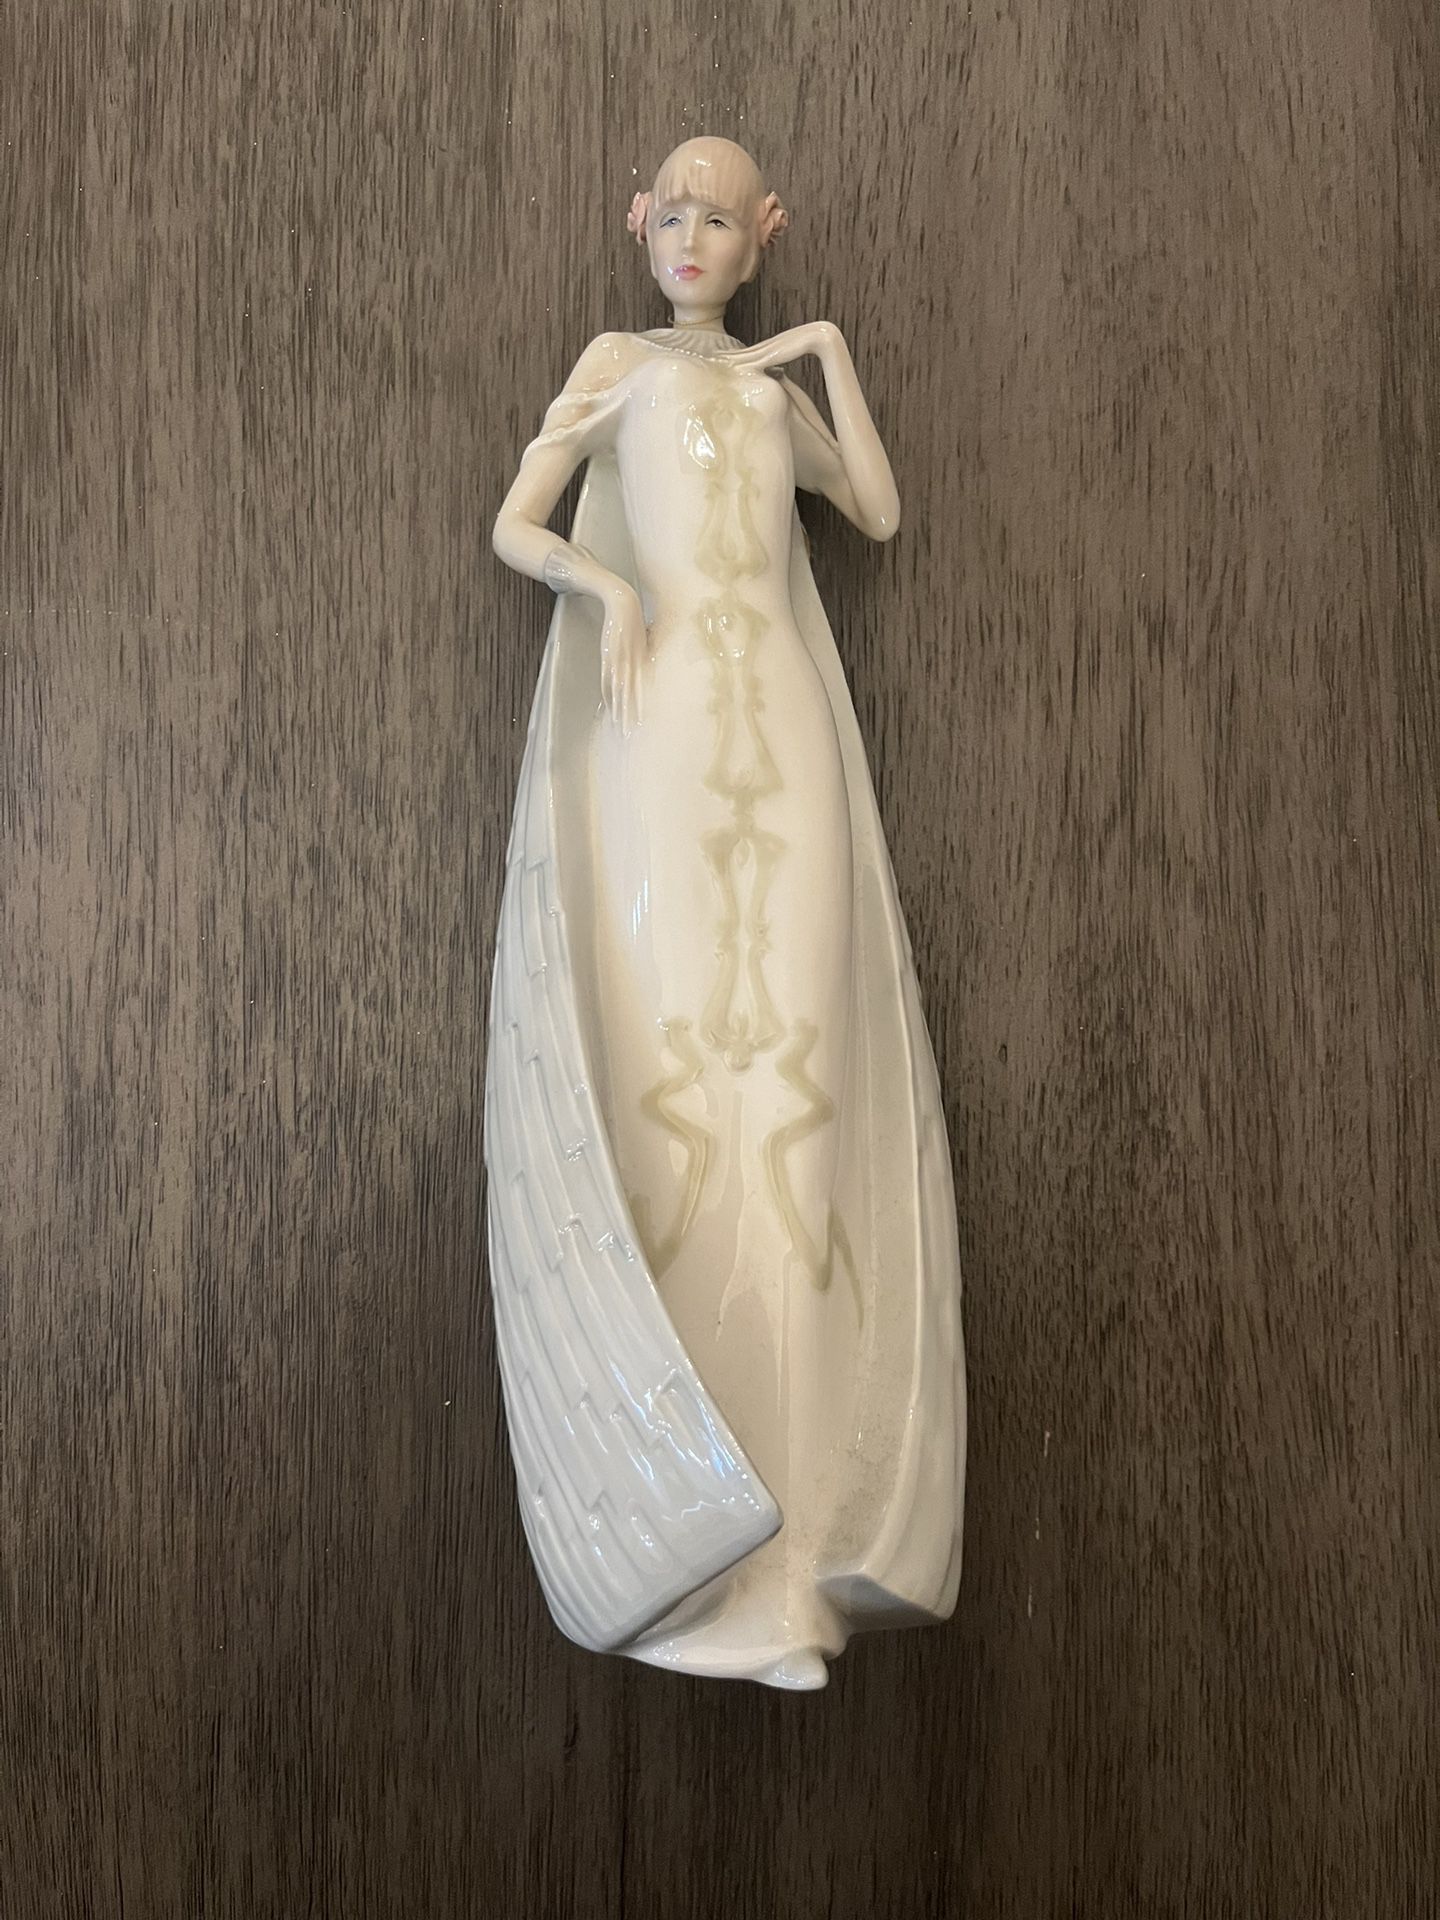 Royal Doulton Figurine. $75 